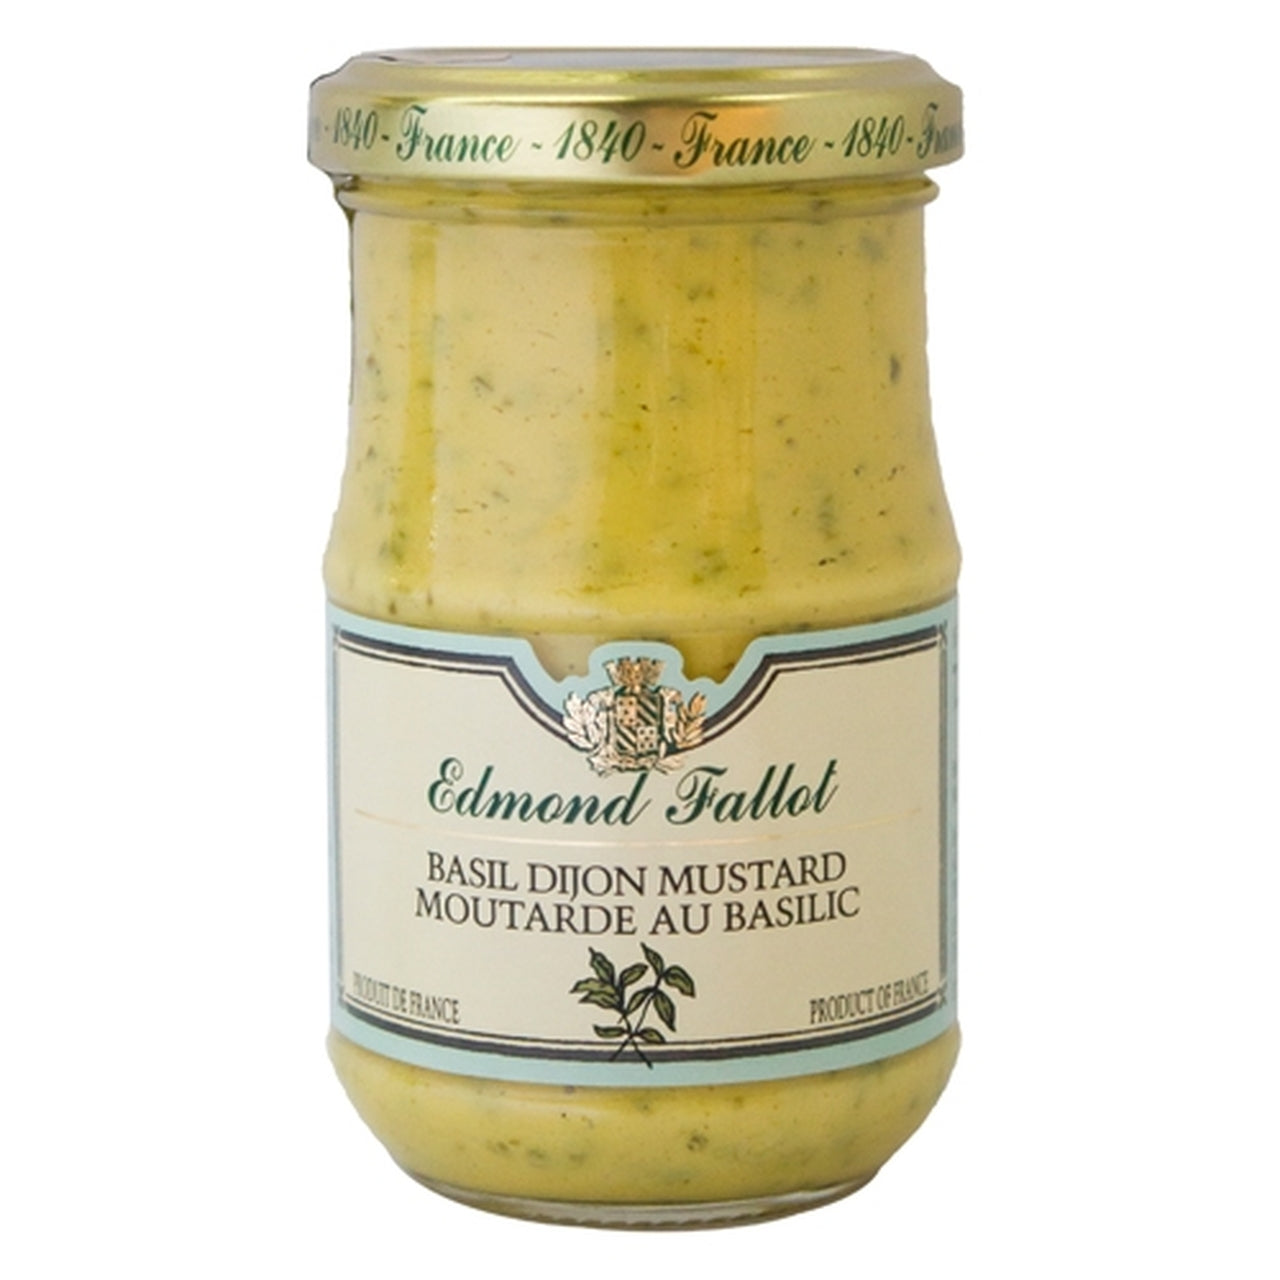 Edmond Fallot, Basil Dijon Mustard, 7.4 oz